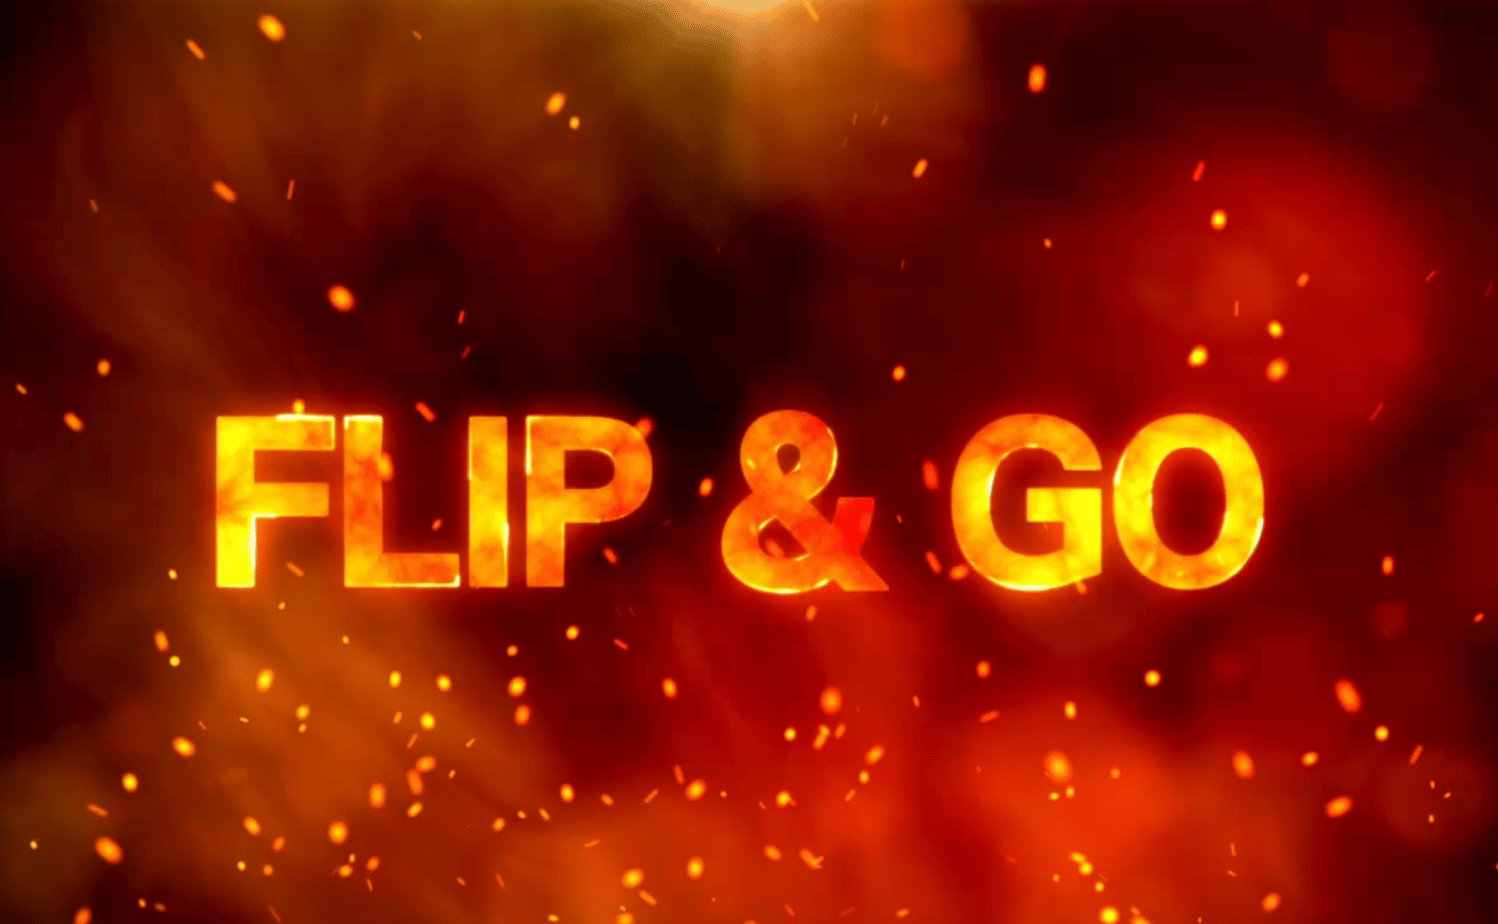 The Beginners Guide Series: Flip & Go